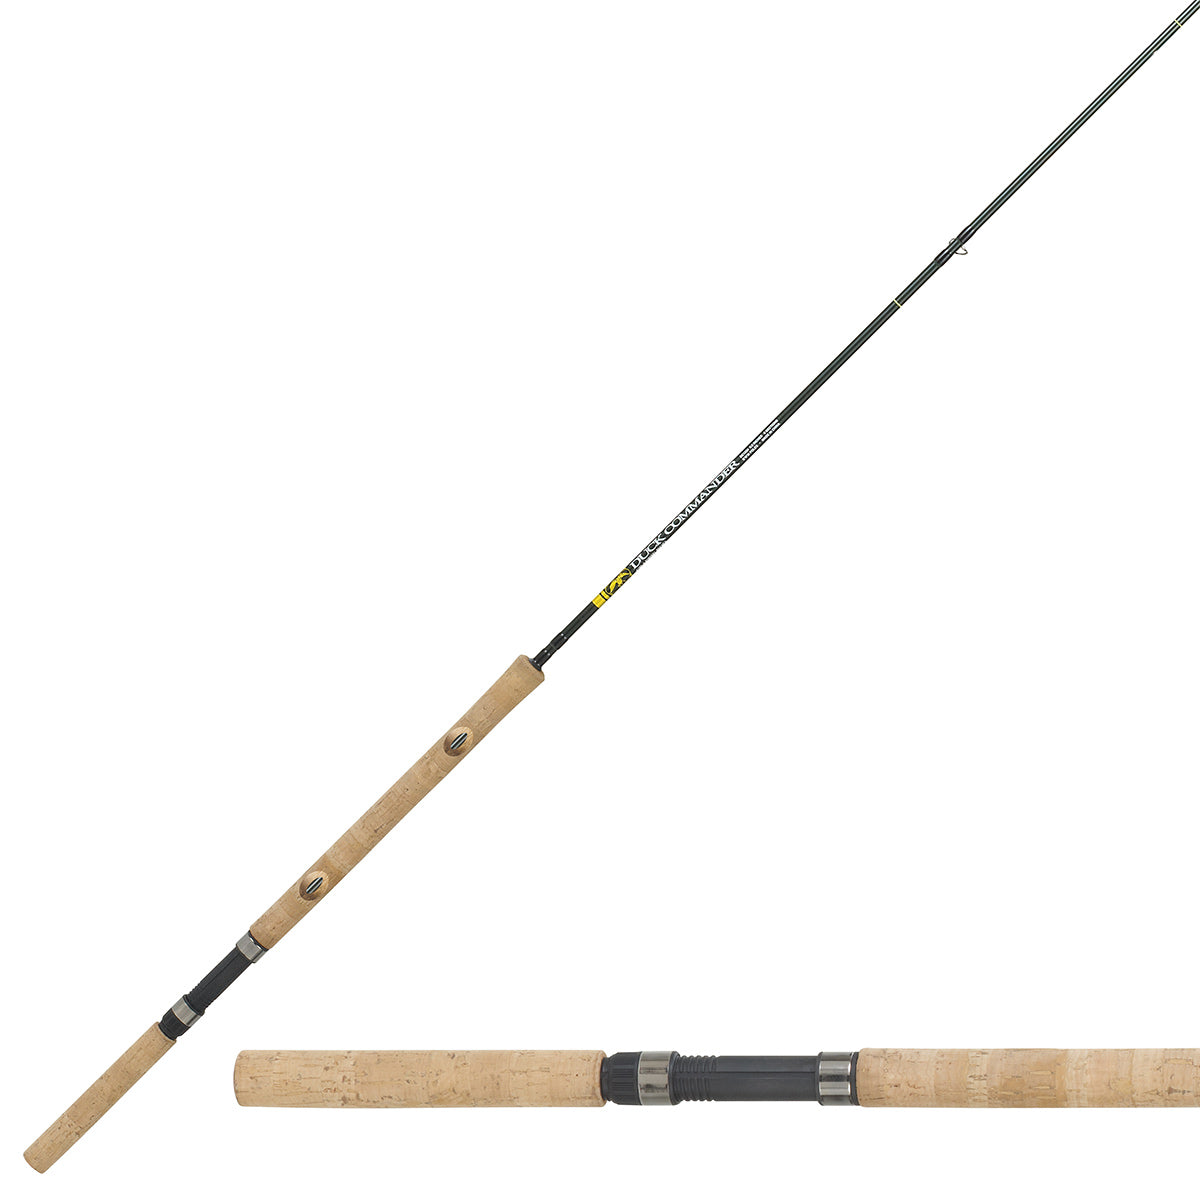 B&M SHSSBS112 Heaton Signature Crappie 11' 2-Pc Pole Spinning FW Fishing Rod